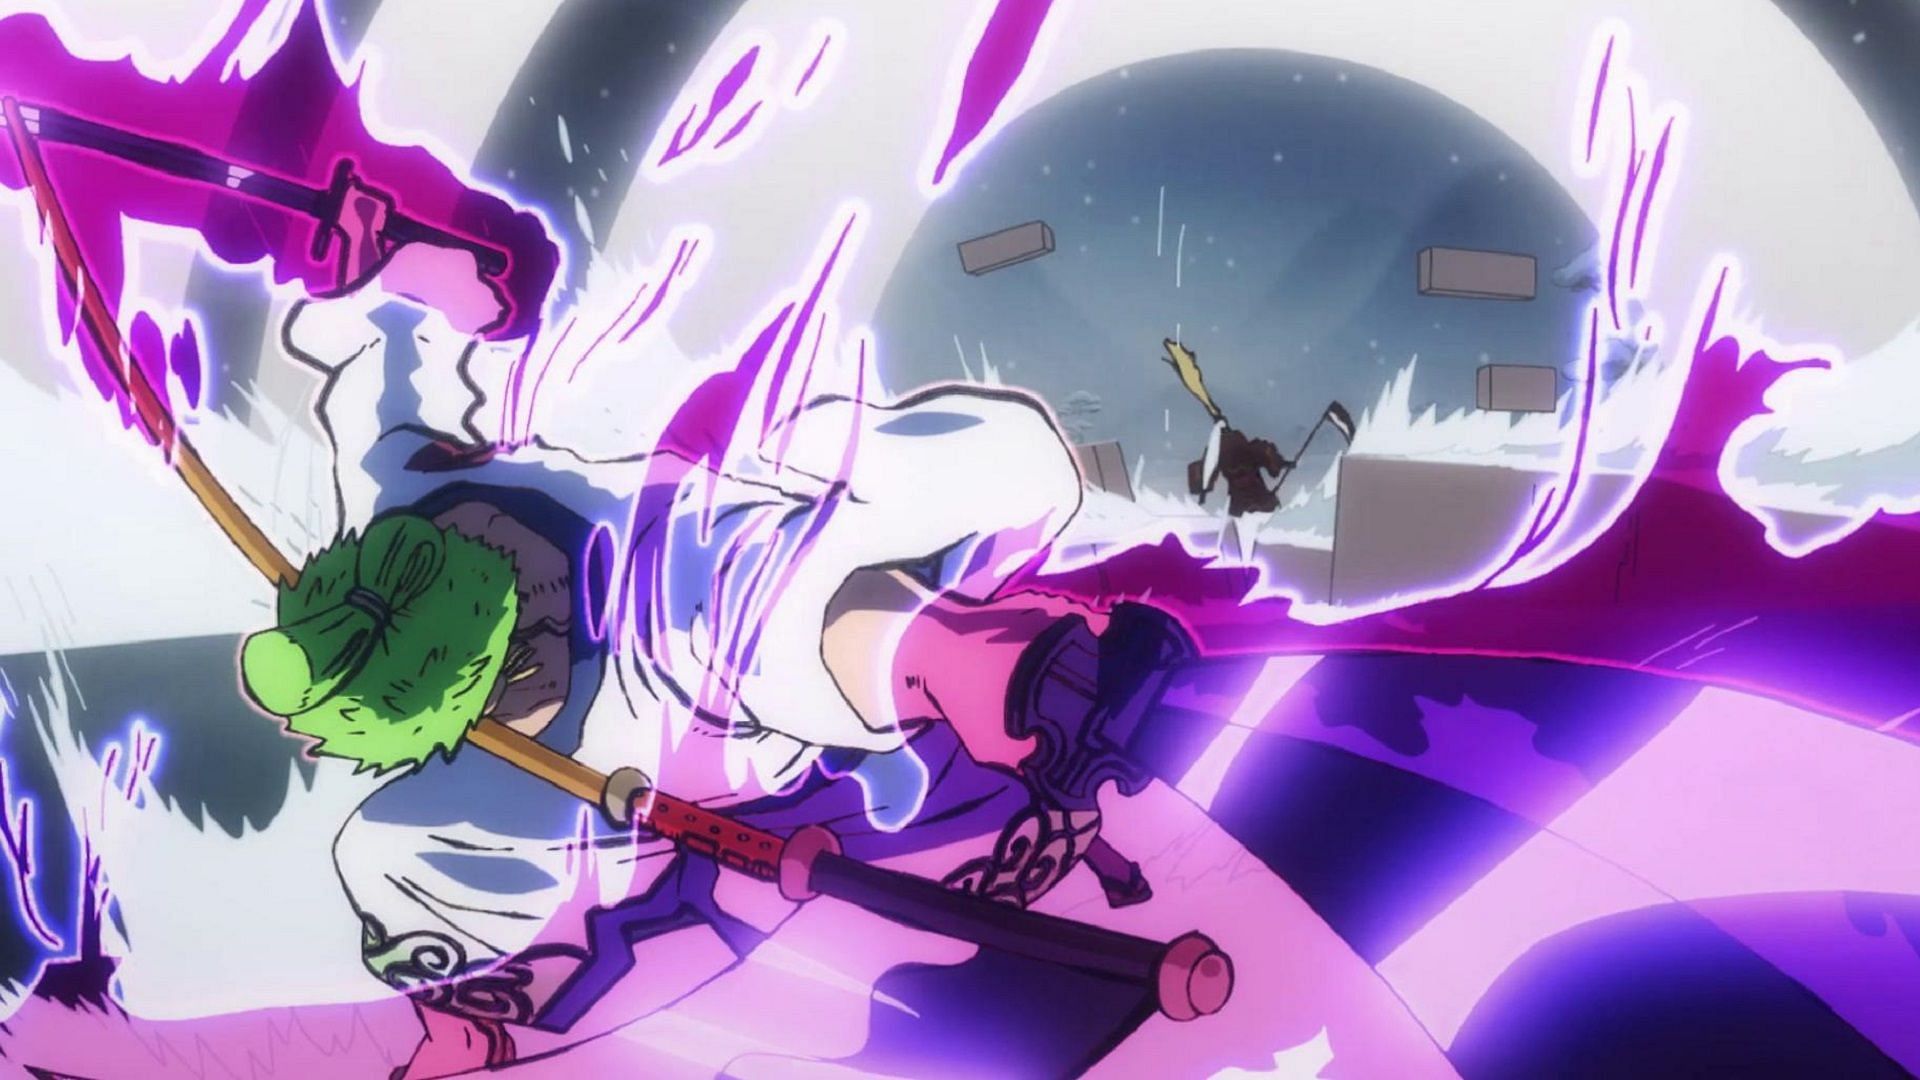 Zoro vs Killer as seen in One Piece (Image via Toei Animation, One Piece)